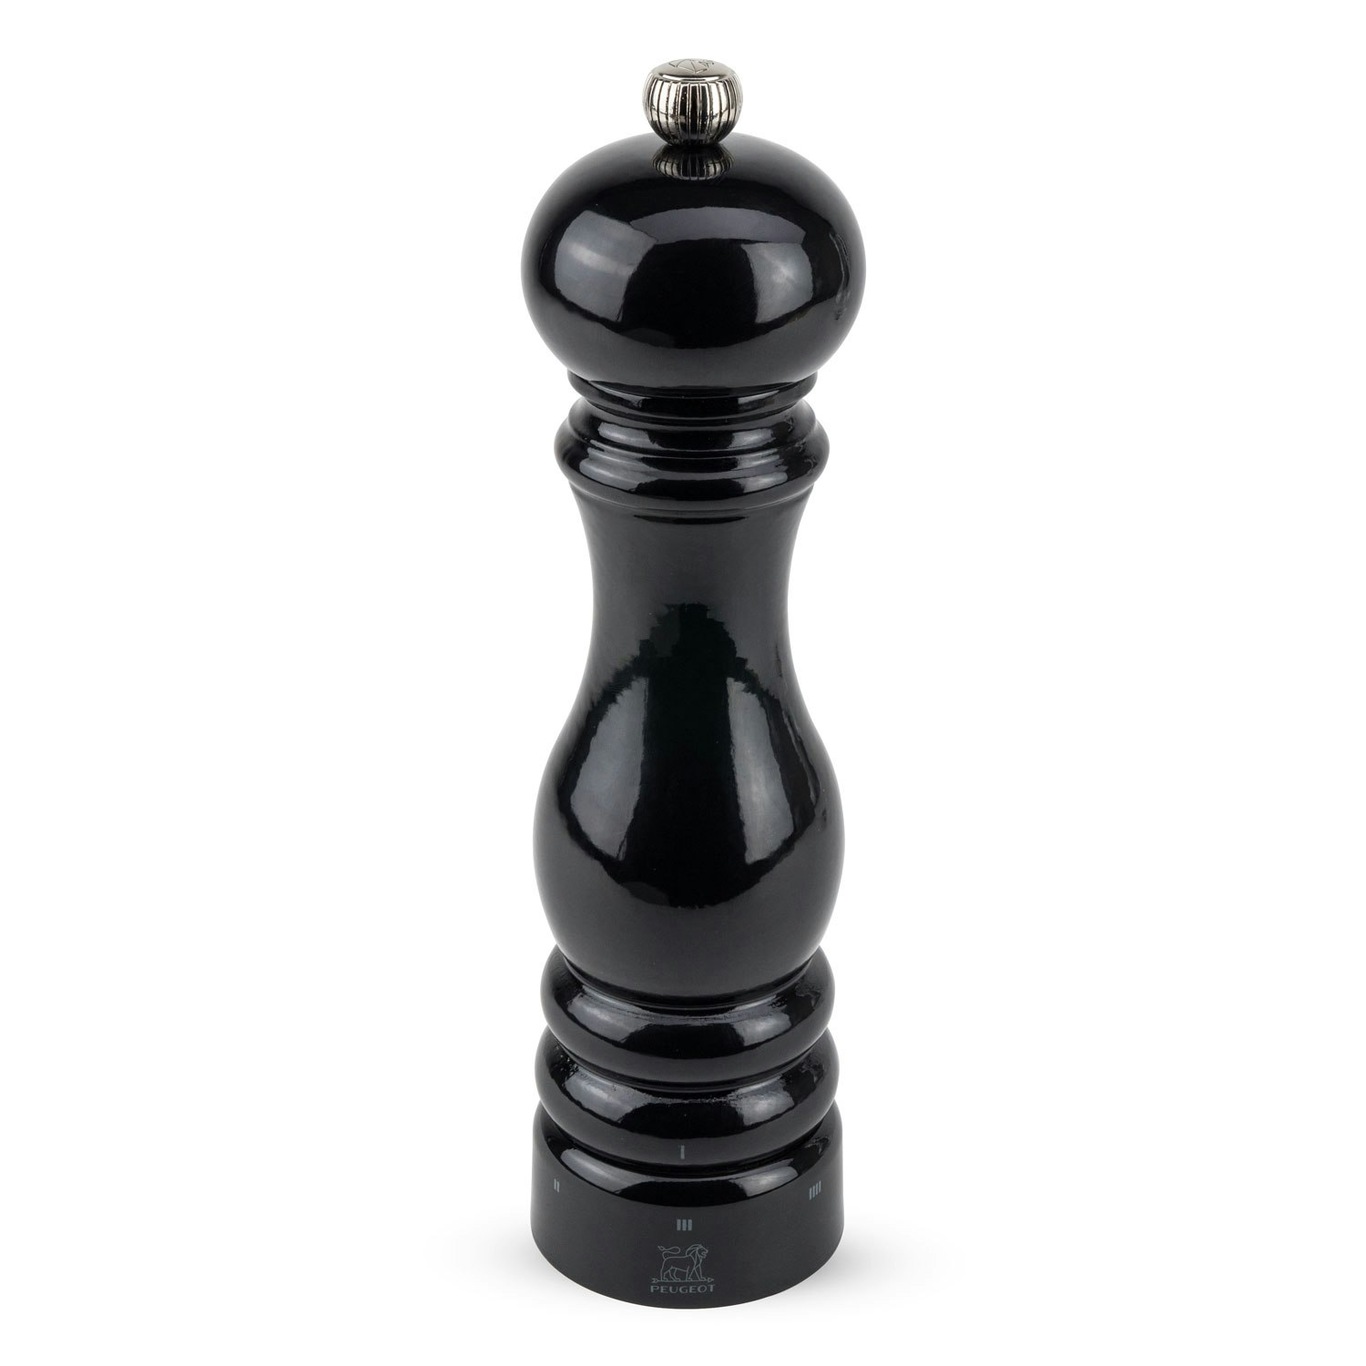 https://royaldesign.com/image/2/peugeot-paris-uselect-pepper-mill-black-lacquered-1?w=800&quality=80